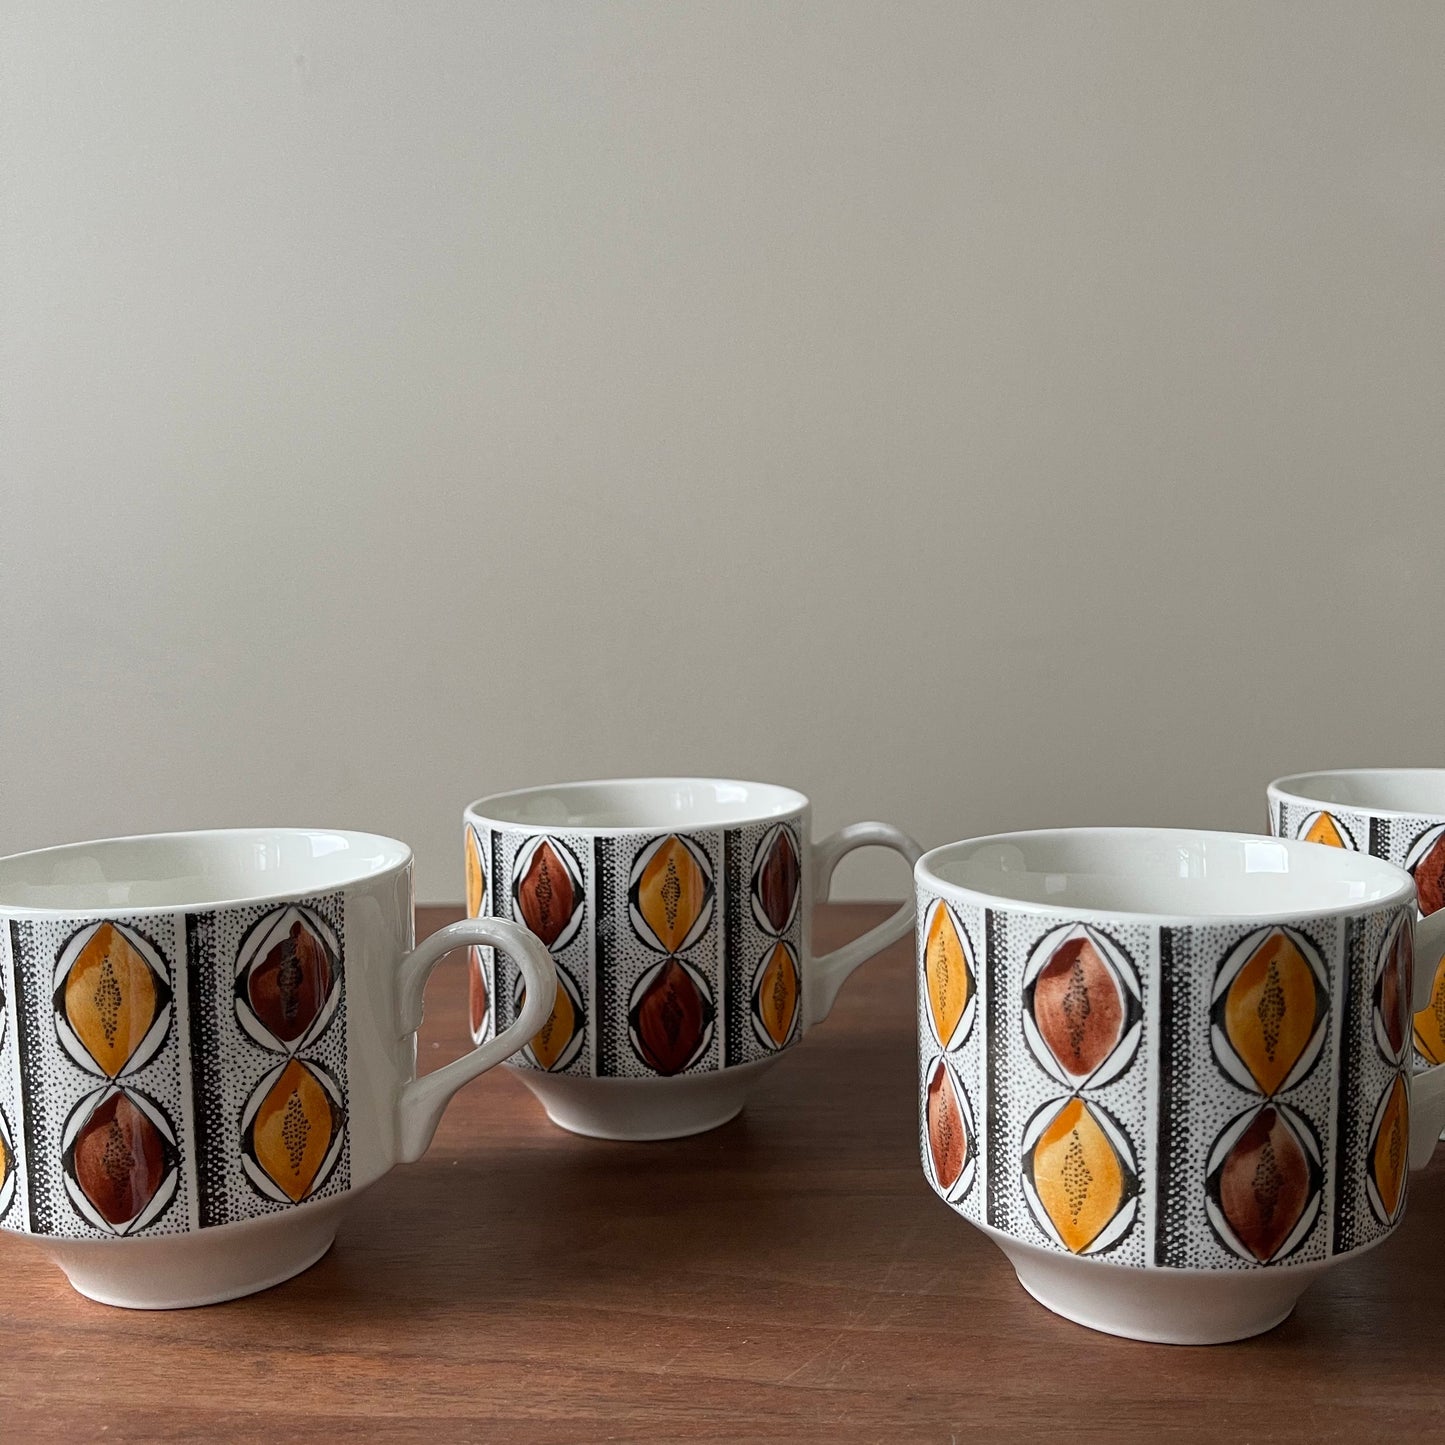 1970's Coffee Mugs Kathie Winkle "Mexico" Pattern Design